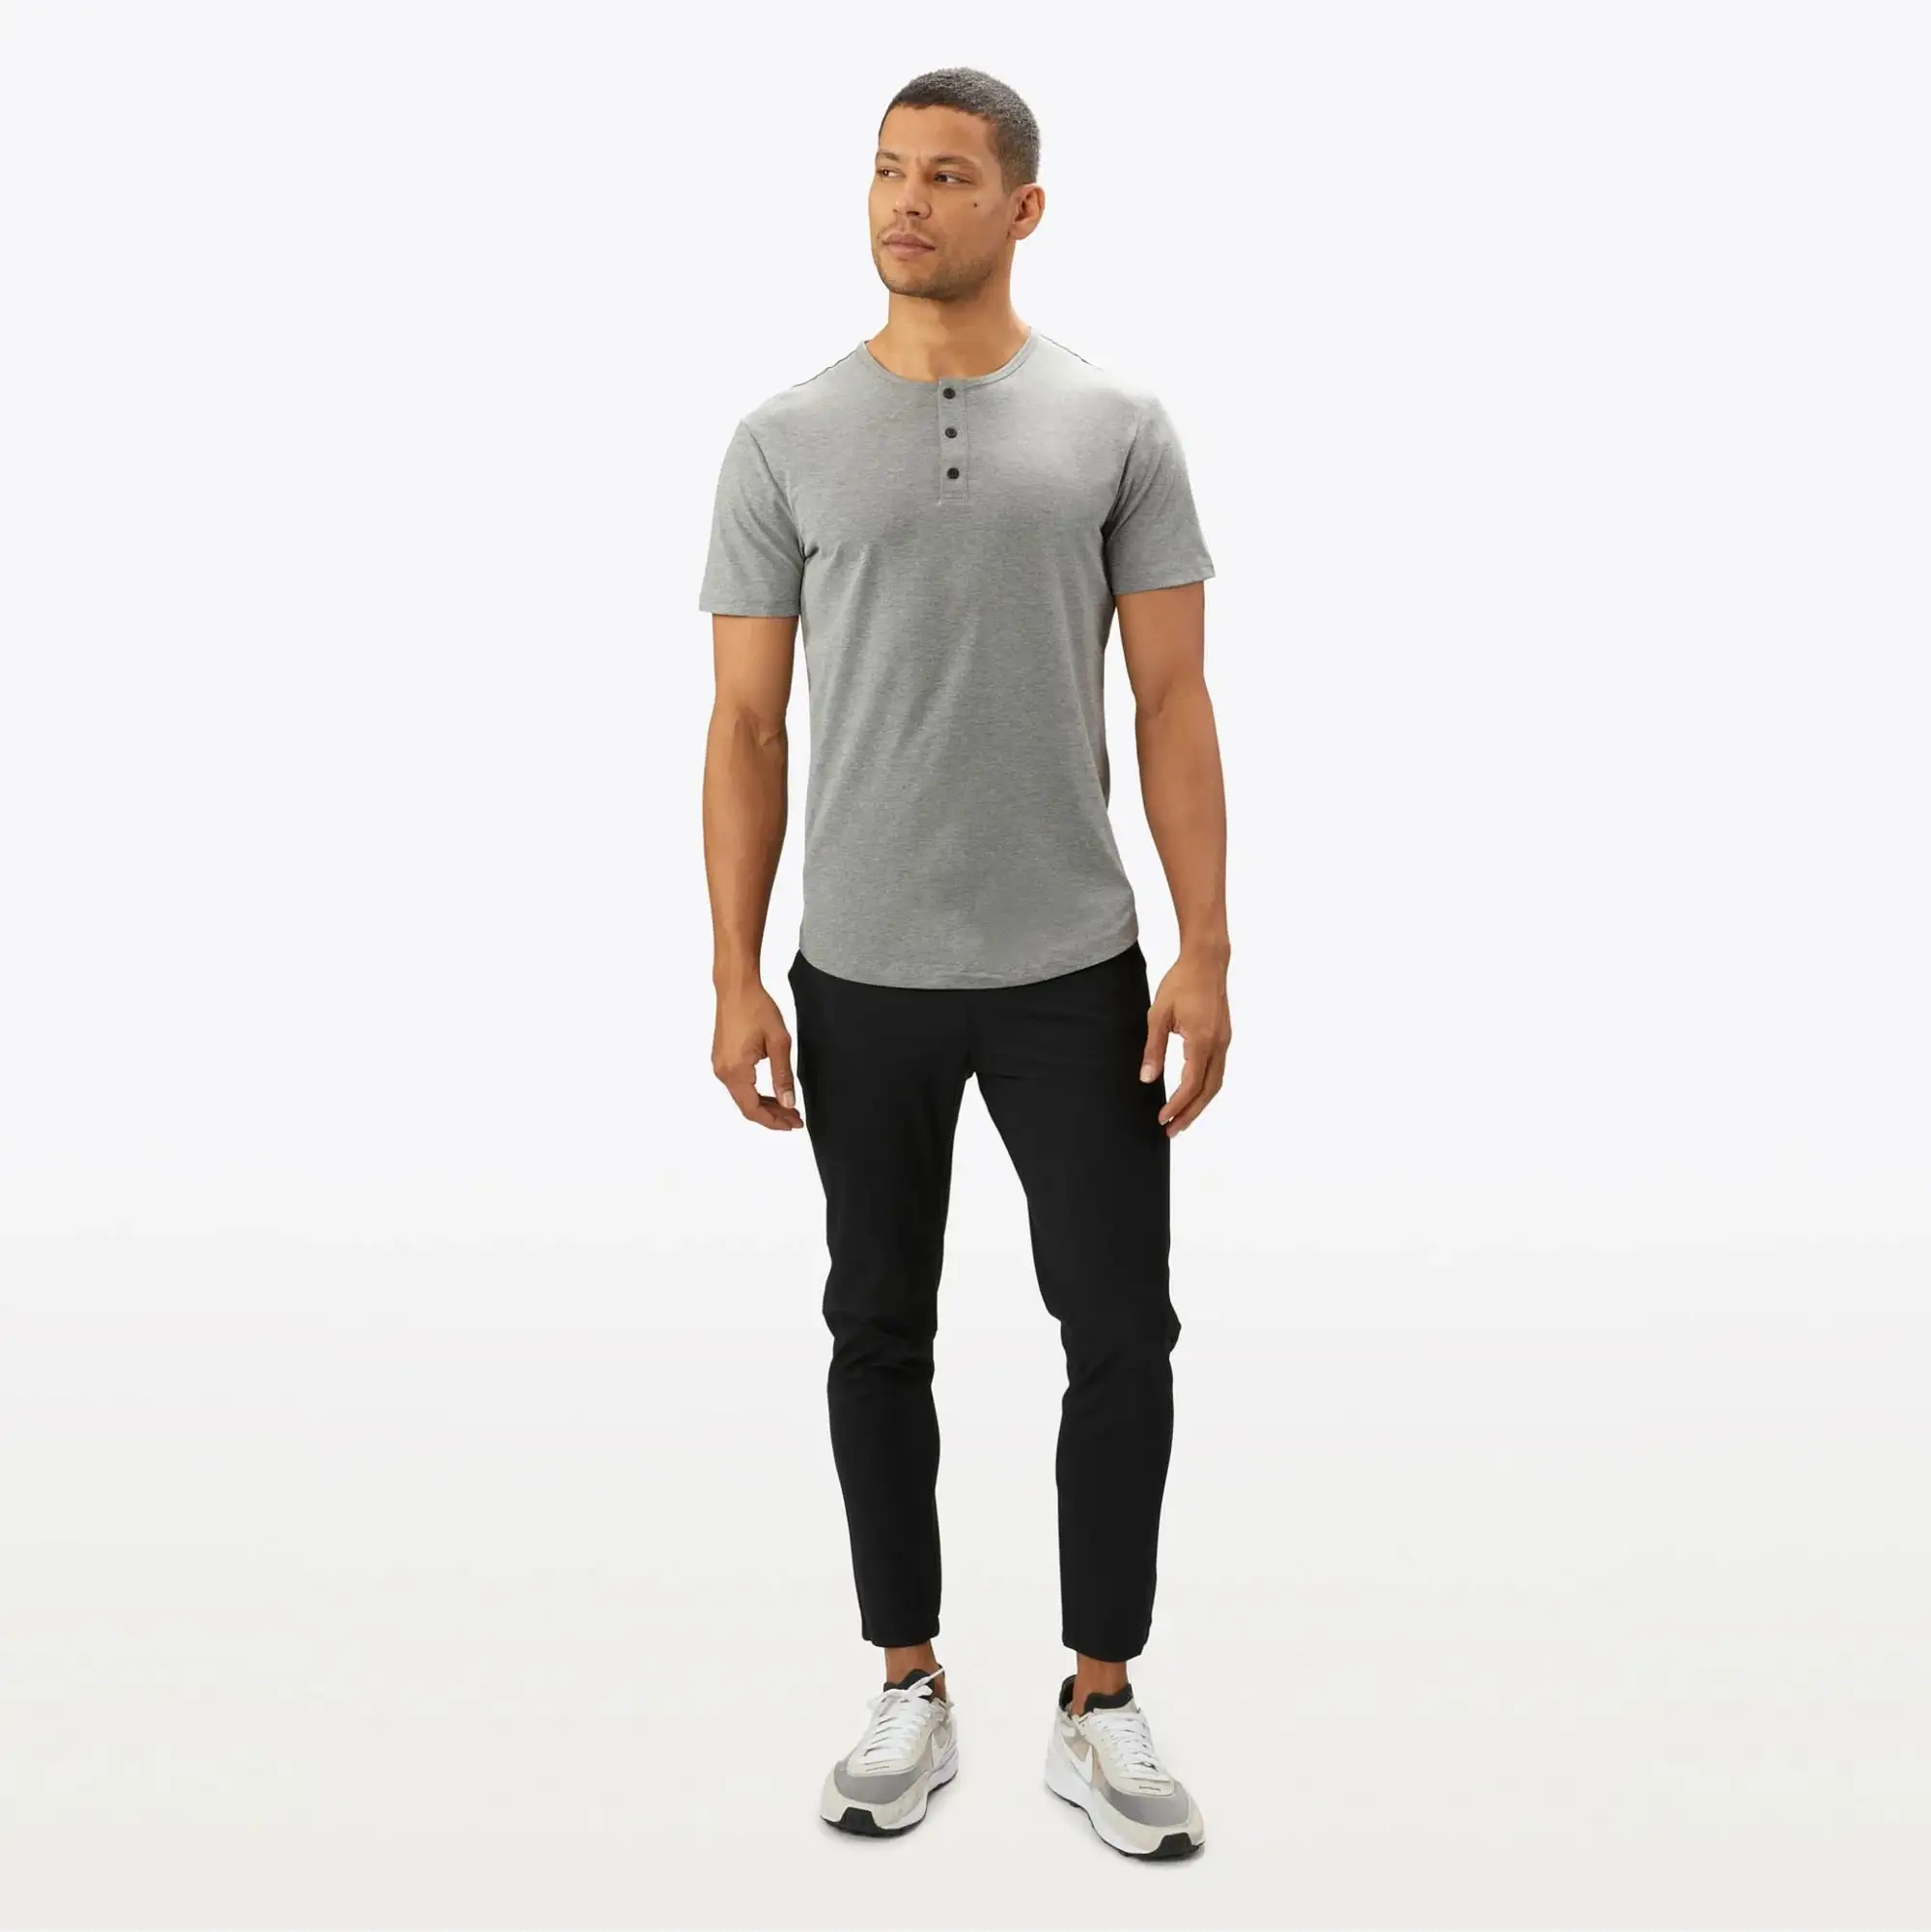 Customizable Wholesale Men's Gym T-Shirt Slim Fit Henley in XS XL Xxs Sizes 100% Cotton Muscle Wear Print Pattern Model Dried